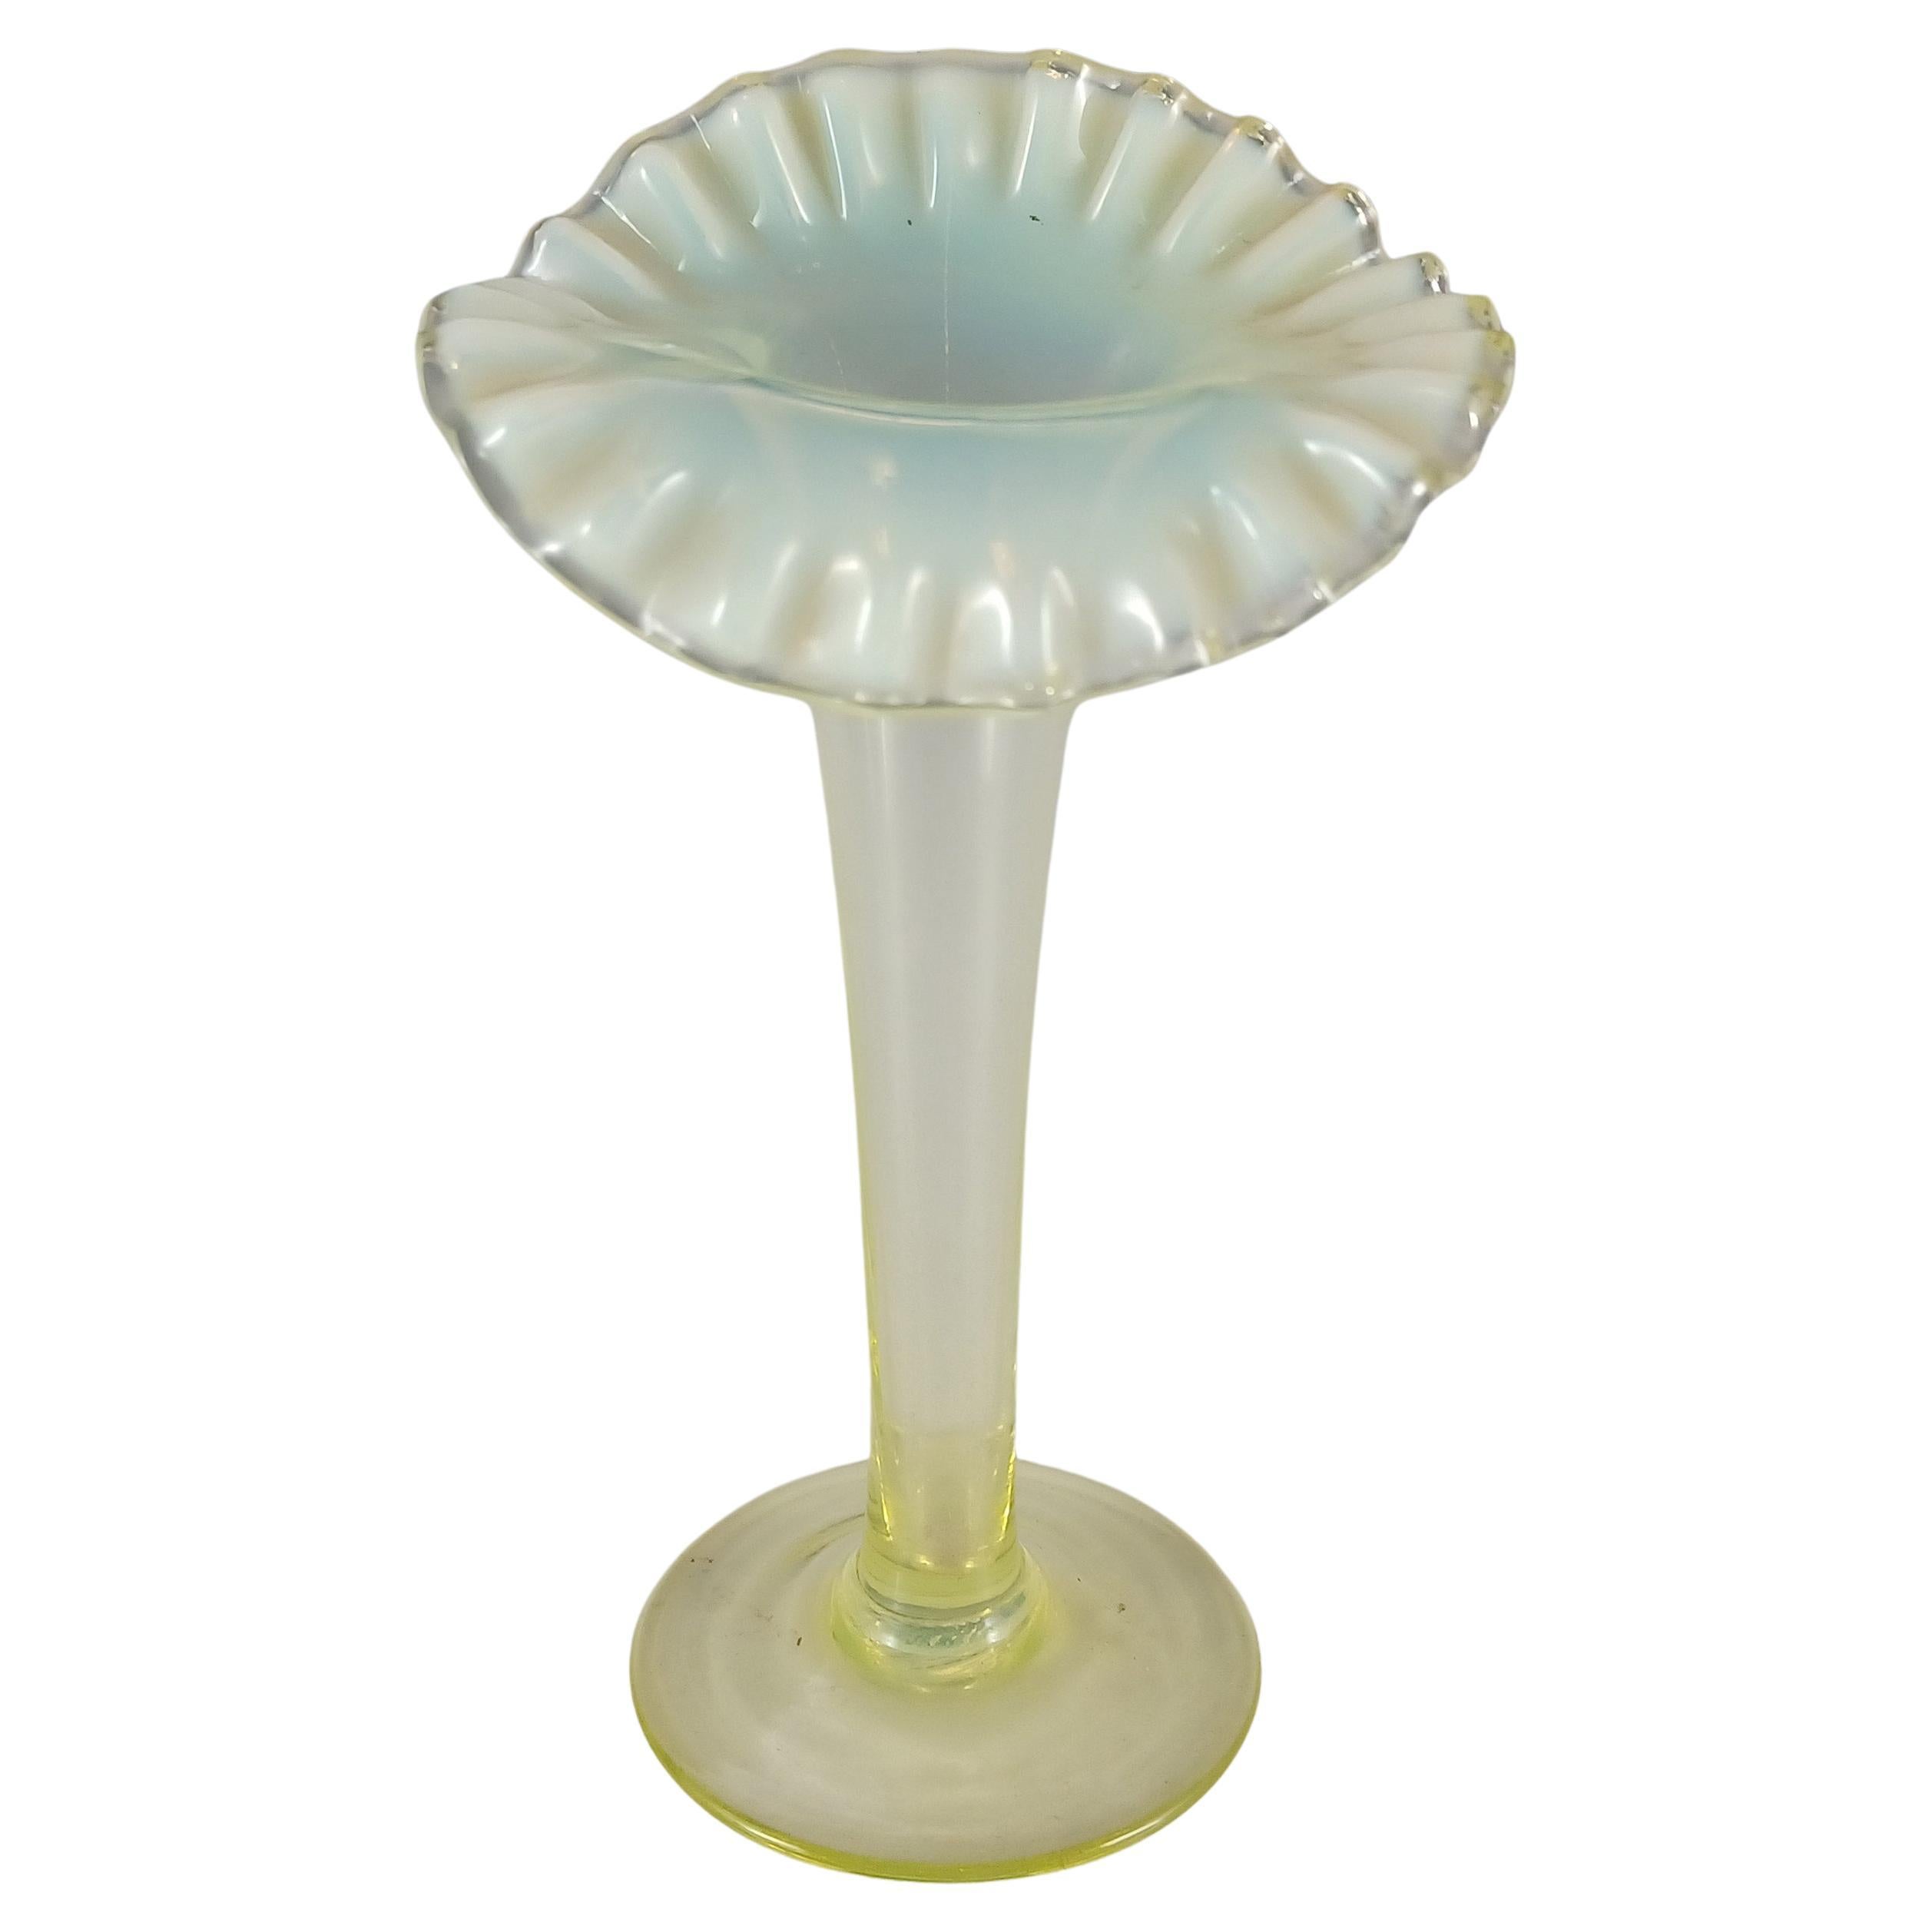 Burtles, Tate & Co Victorian 1890's Vaseline/Uranium Glass Pulpit Vase